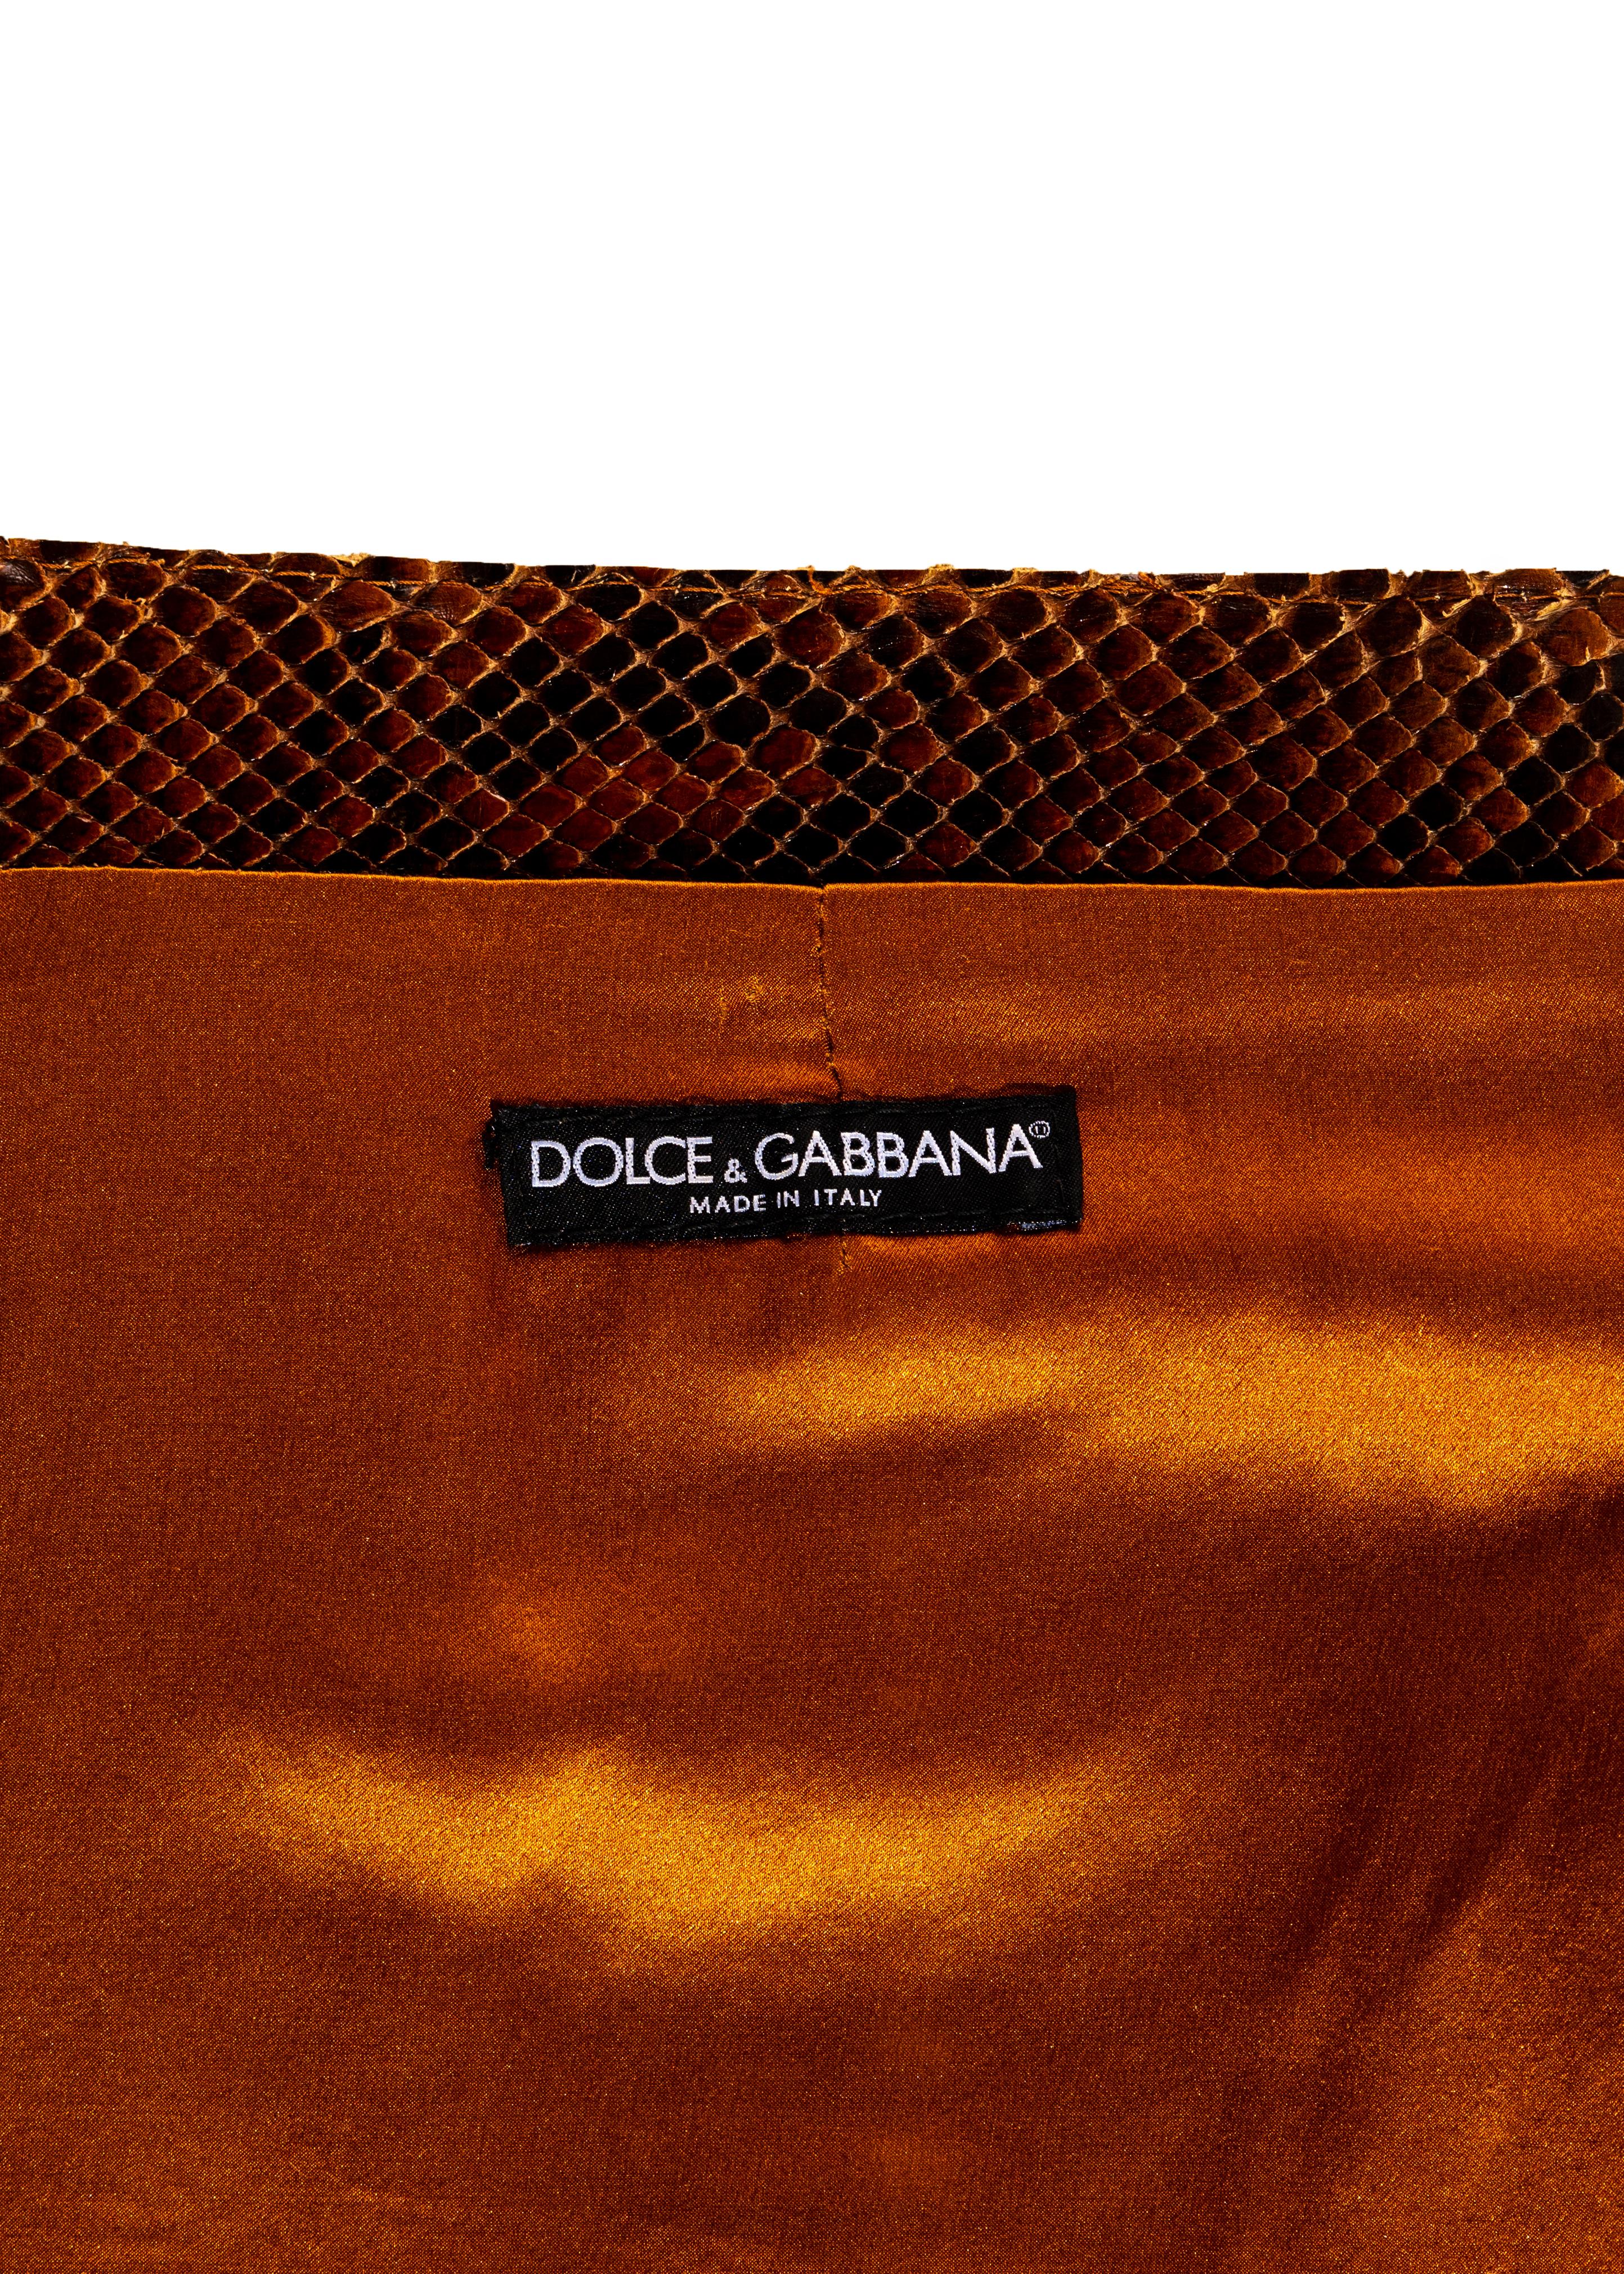 Dolce & Gabbana brown python mini skirt, ss 2000 1